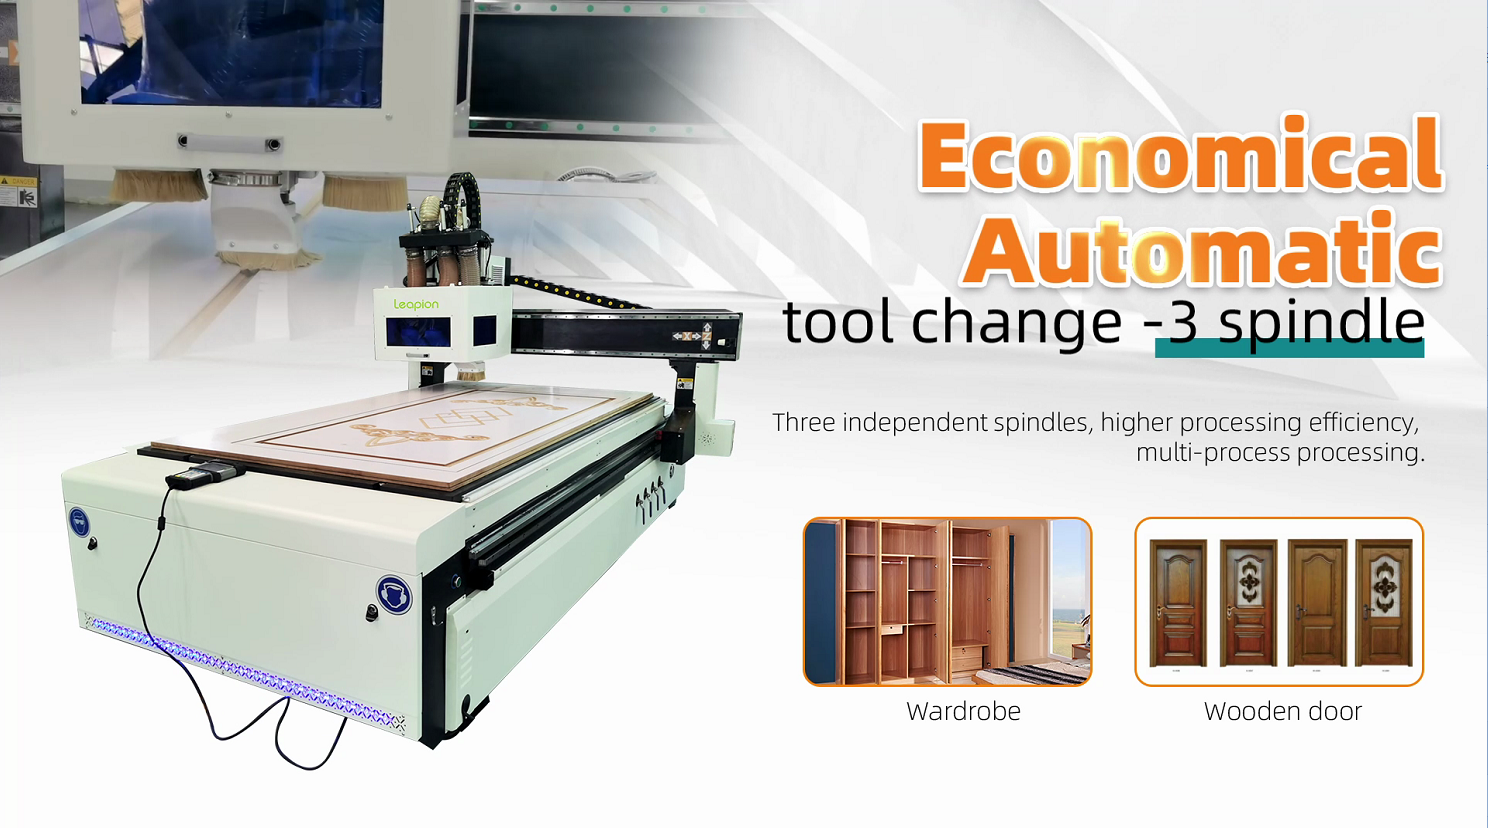 Leapion CNC Economical Automatic tool change - 3 spindle